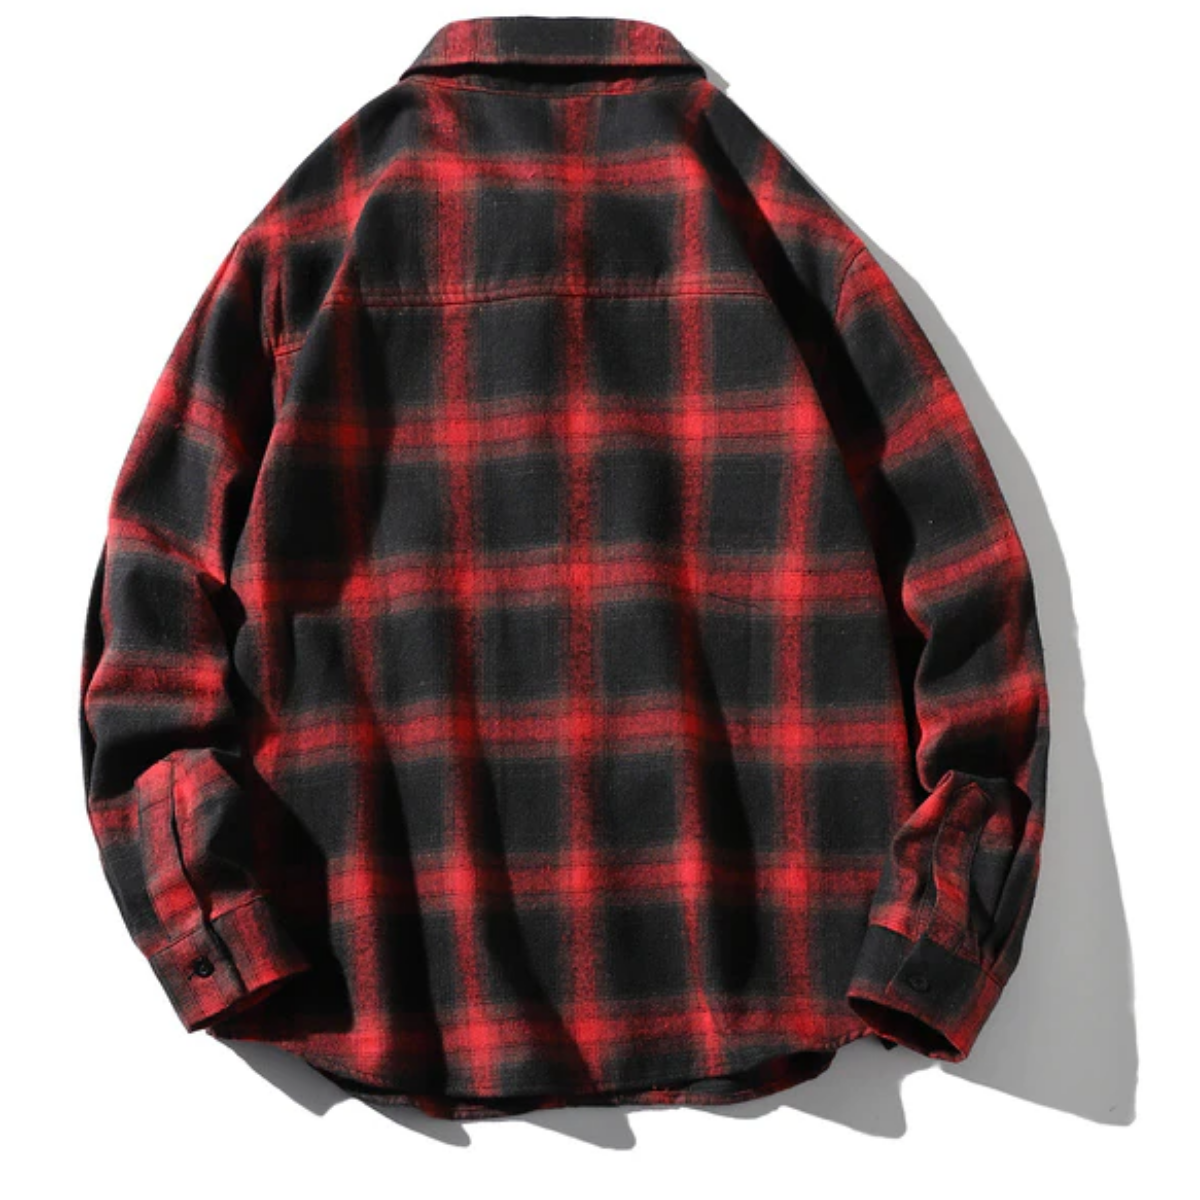 Men's Classic Plaid Flannel Shirt, Red/Black